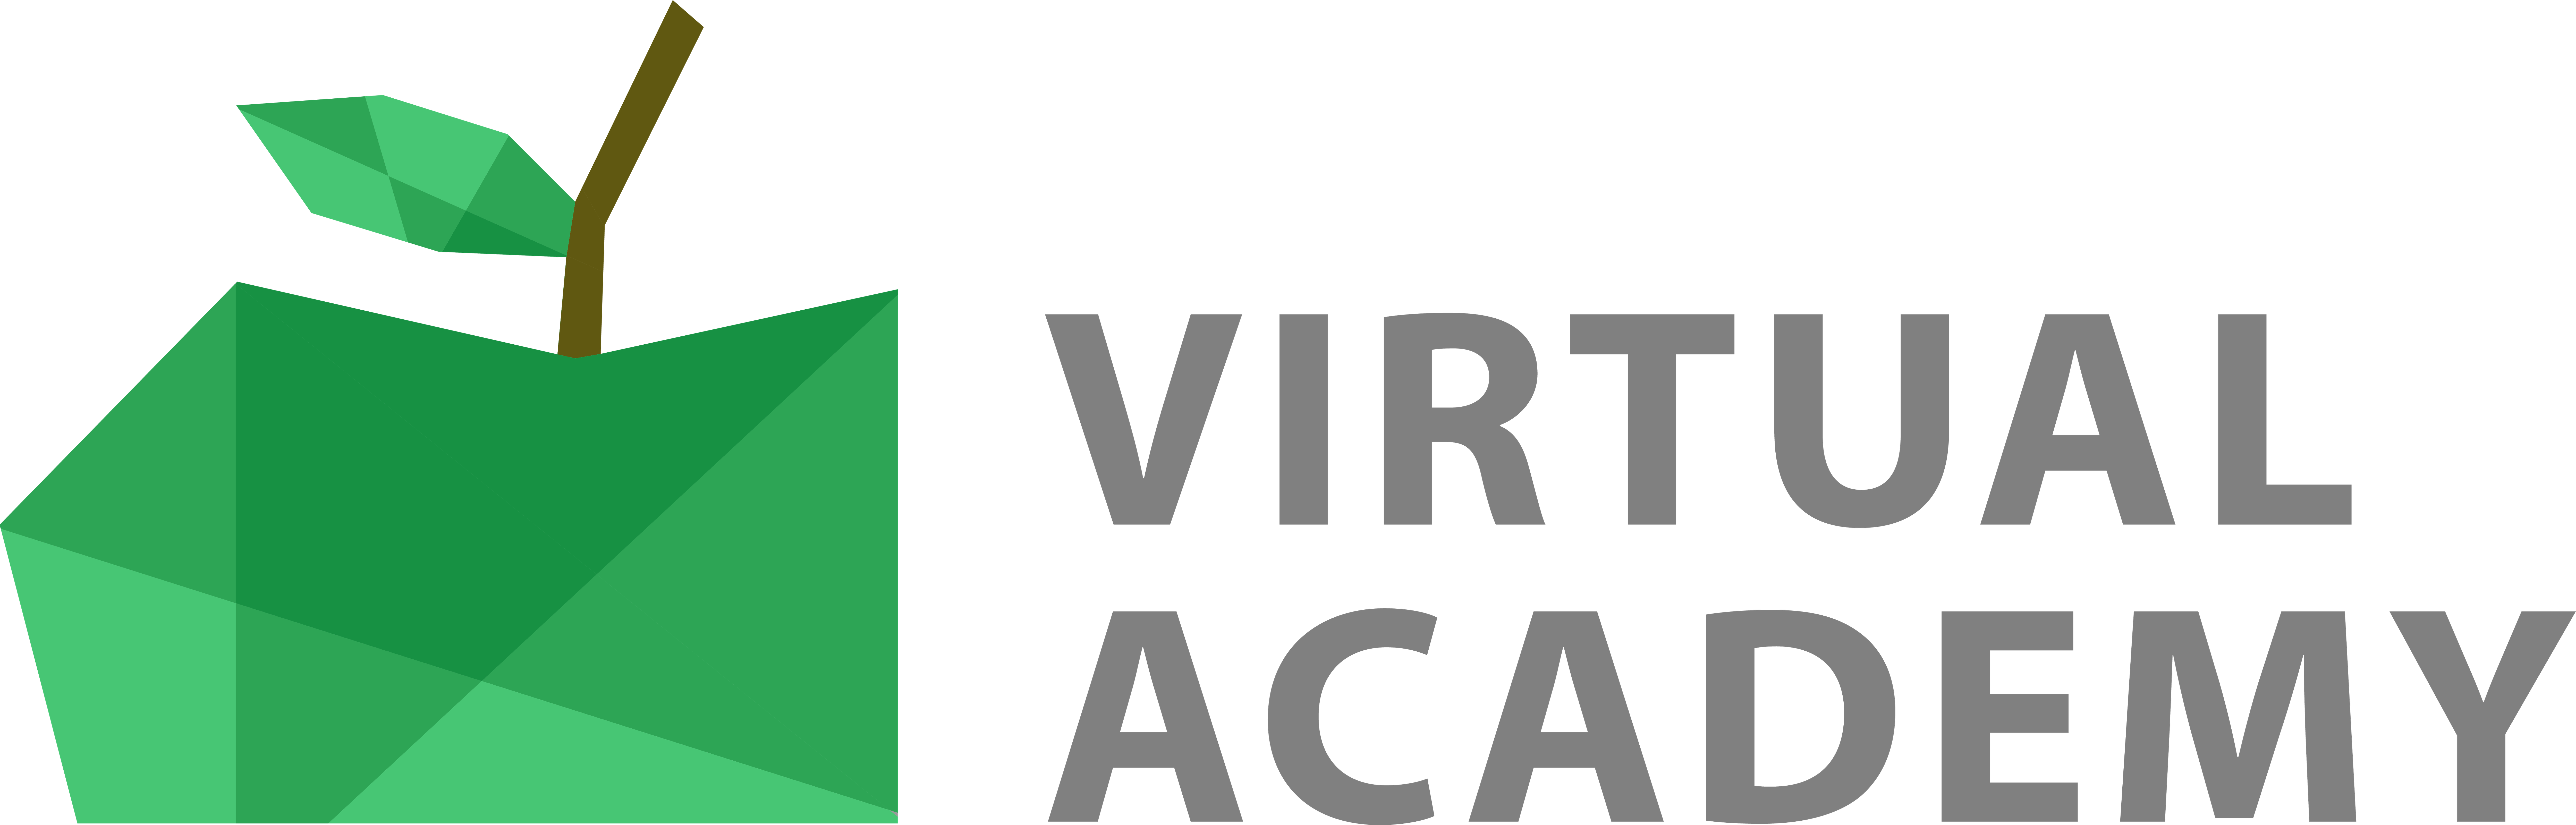 Virtual Academy